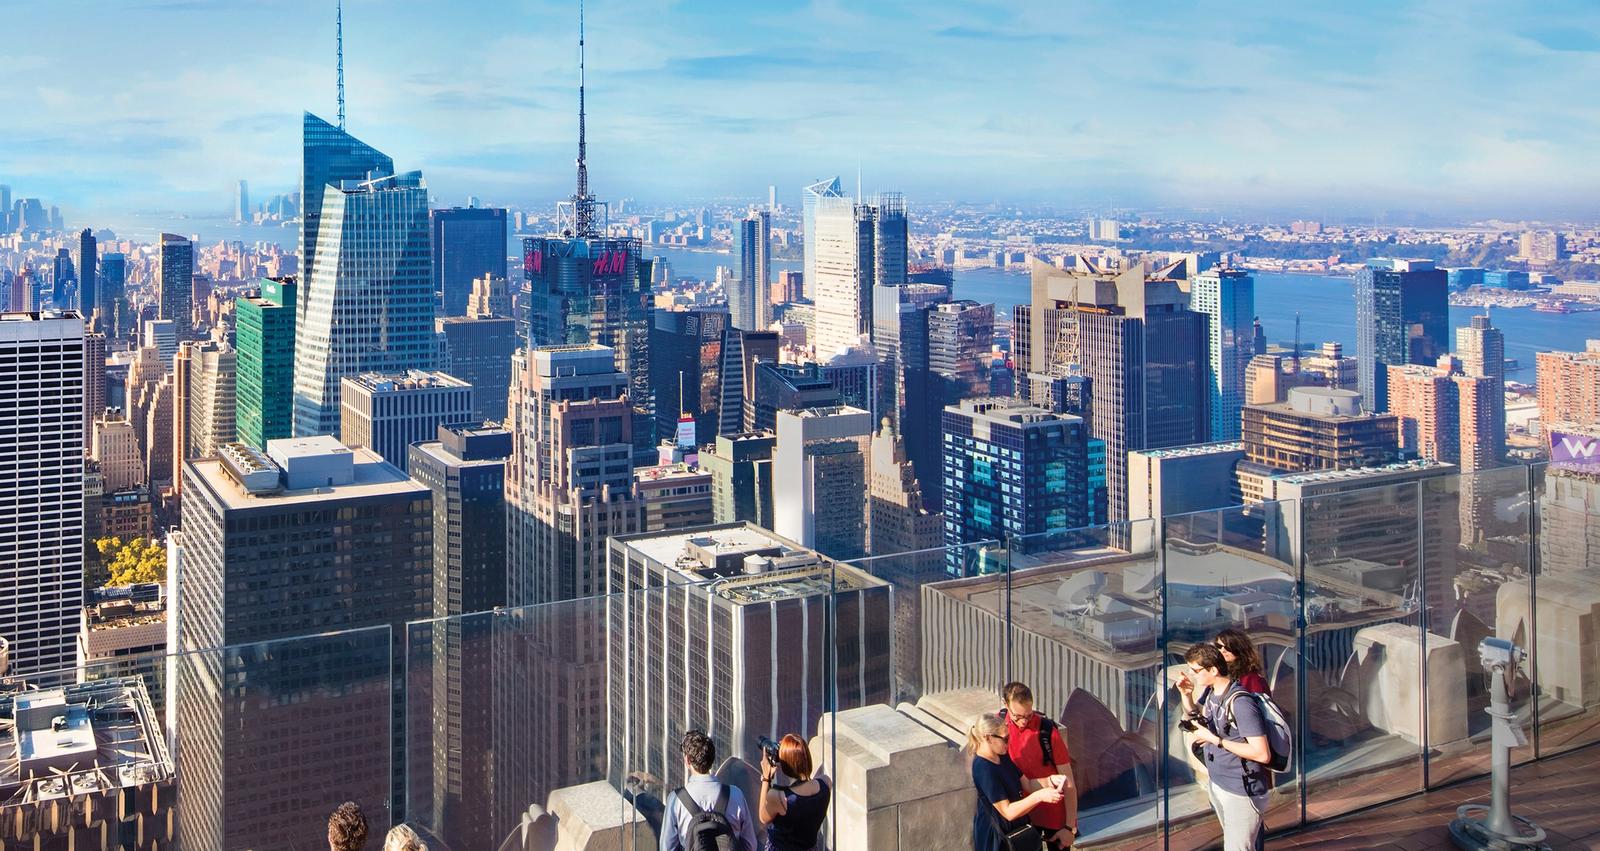 amerikansk dollar øge fejre Top of the Rock NYC Observation Deck | Best Skyline Views of Manhattan